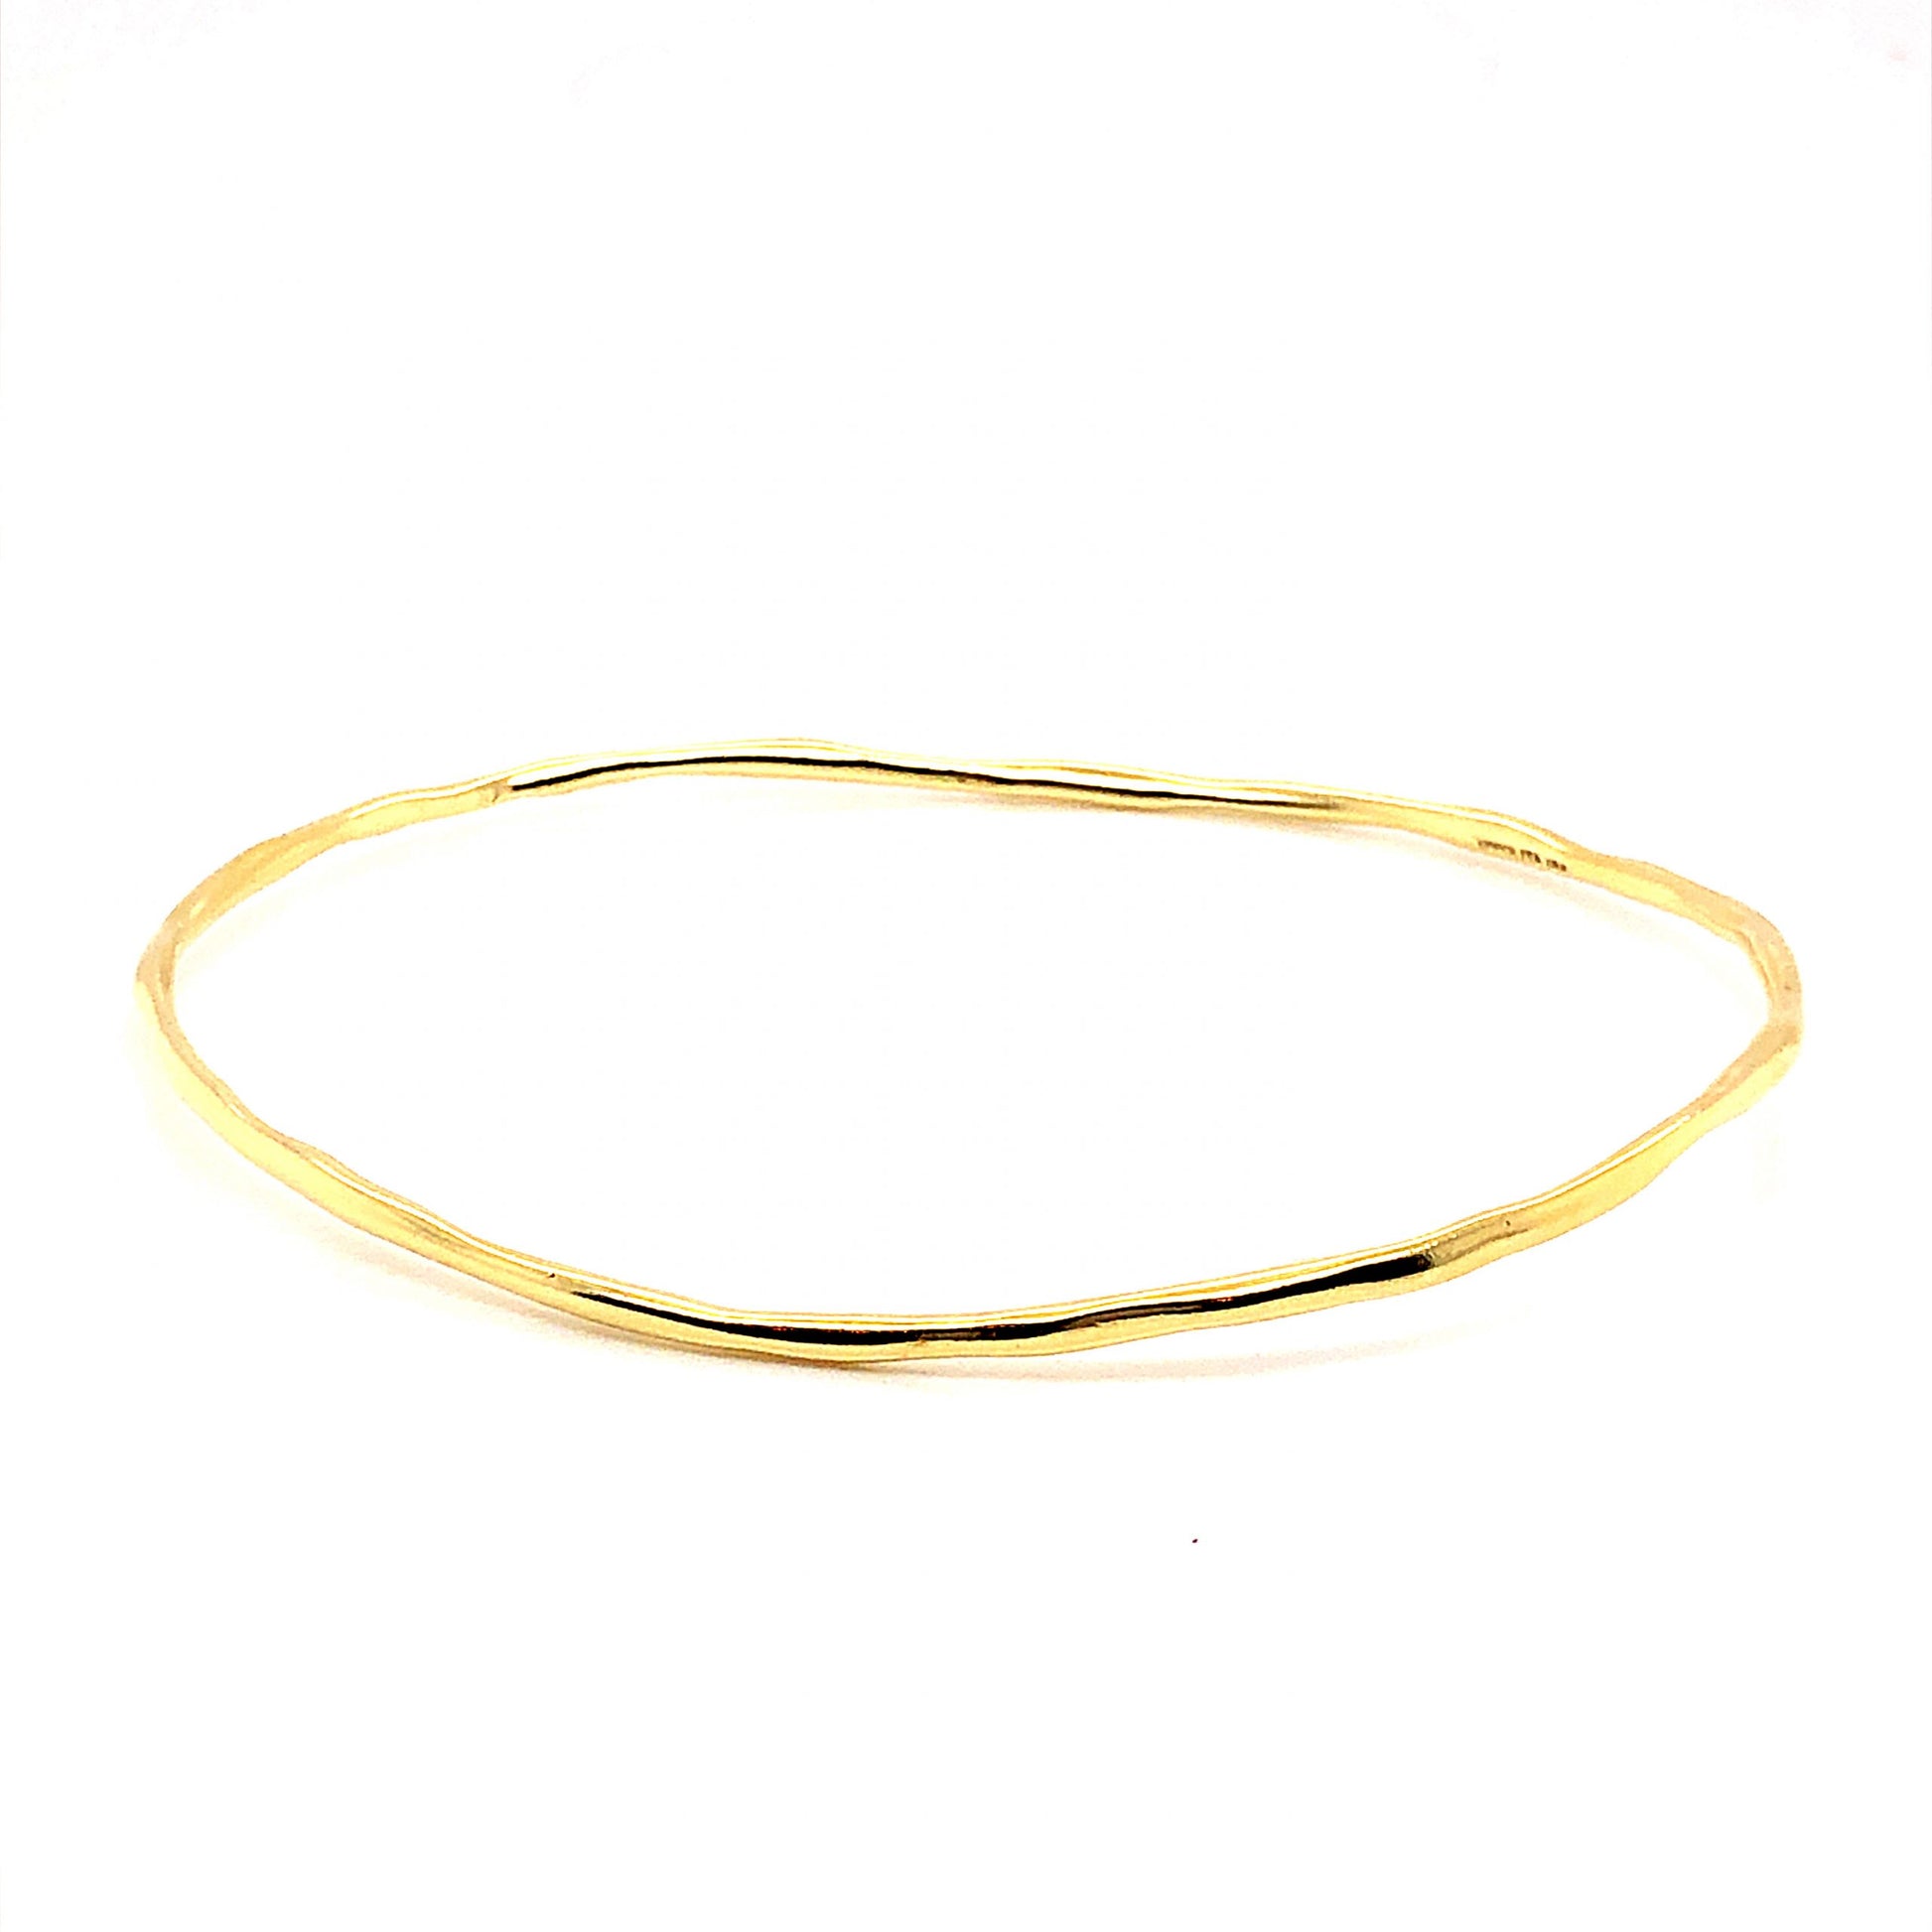 Thin Bangle Bracelet in 18k Yellow Gold